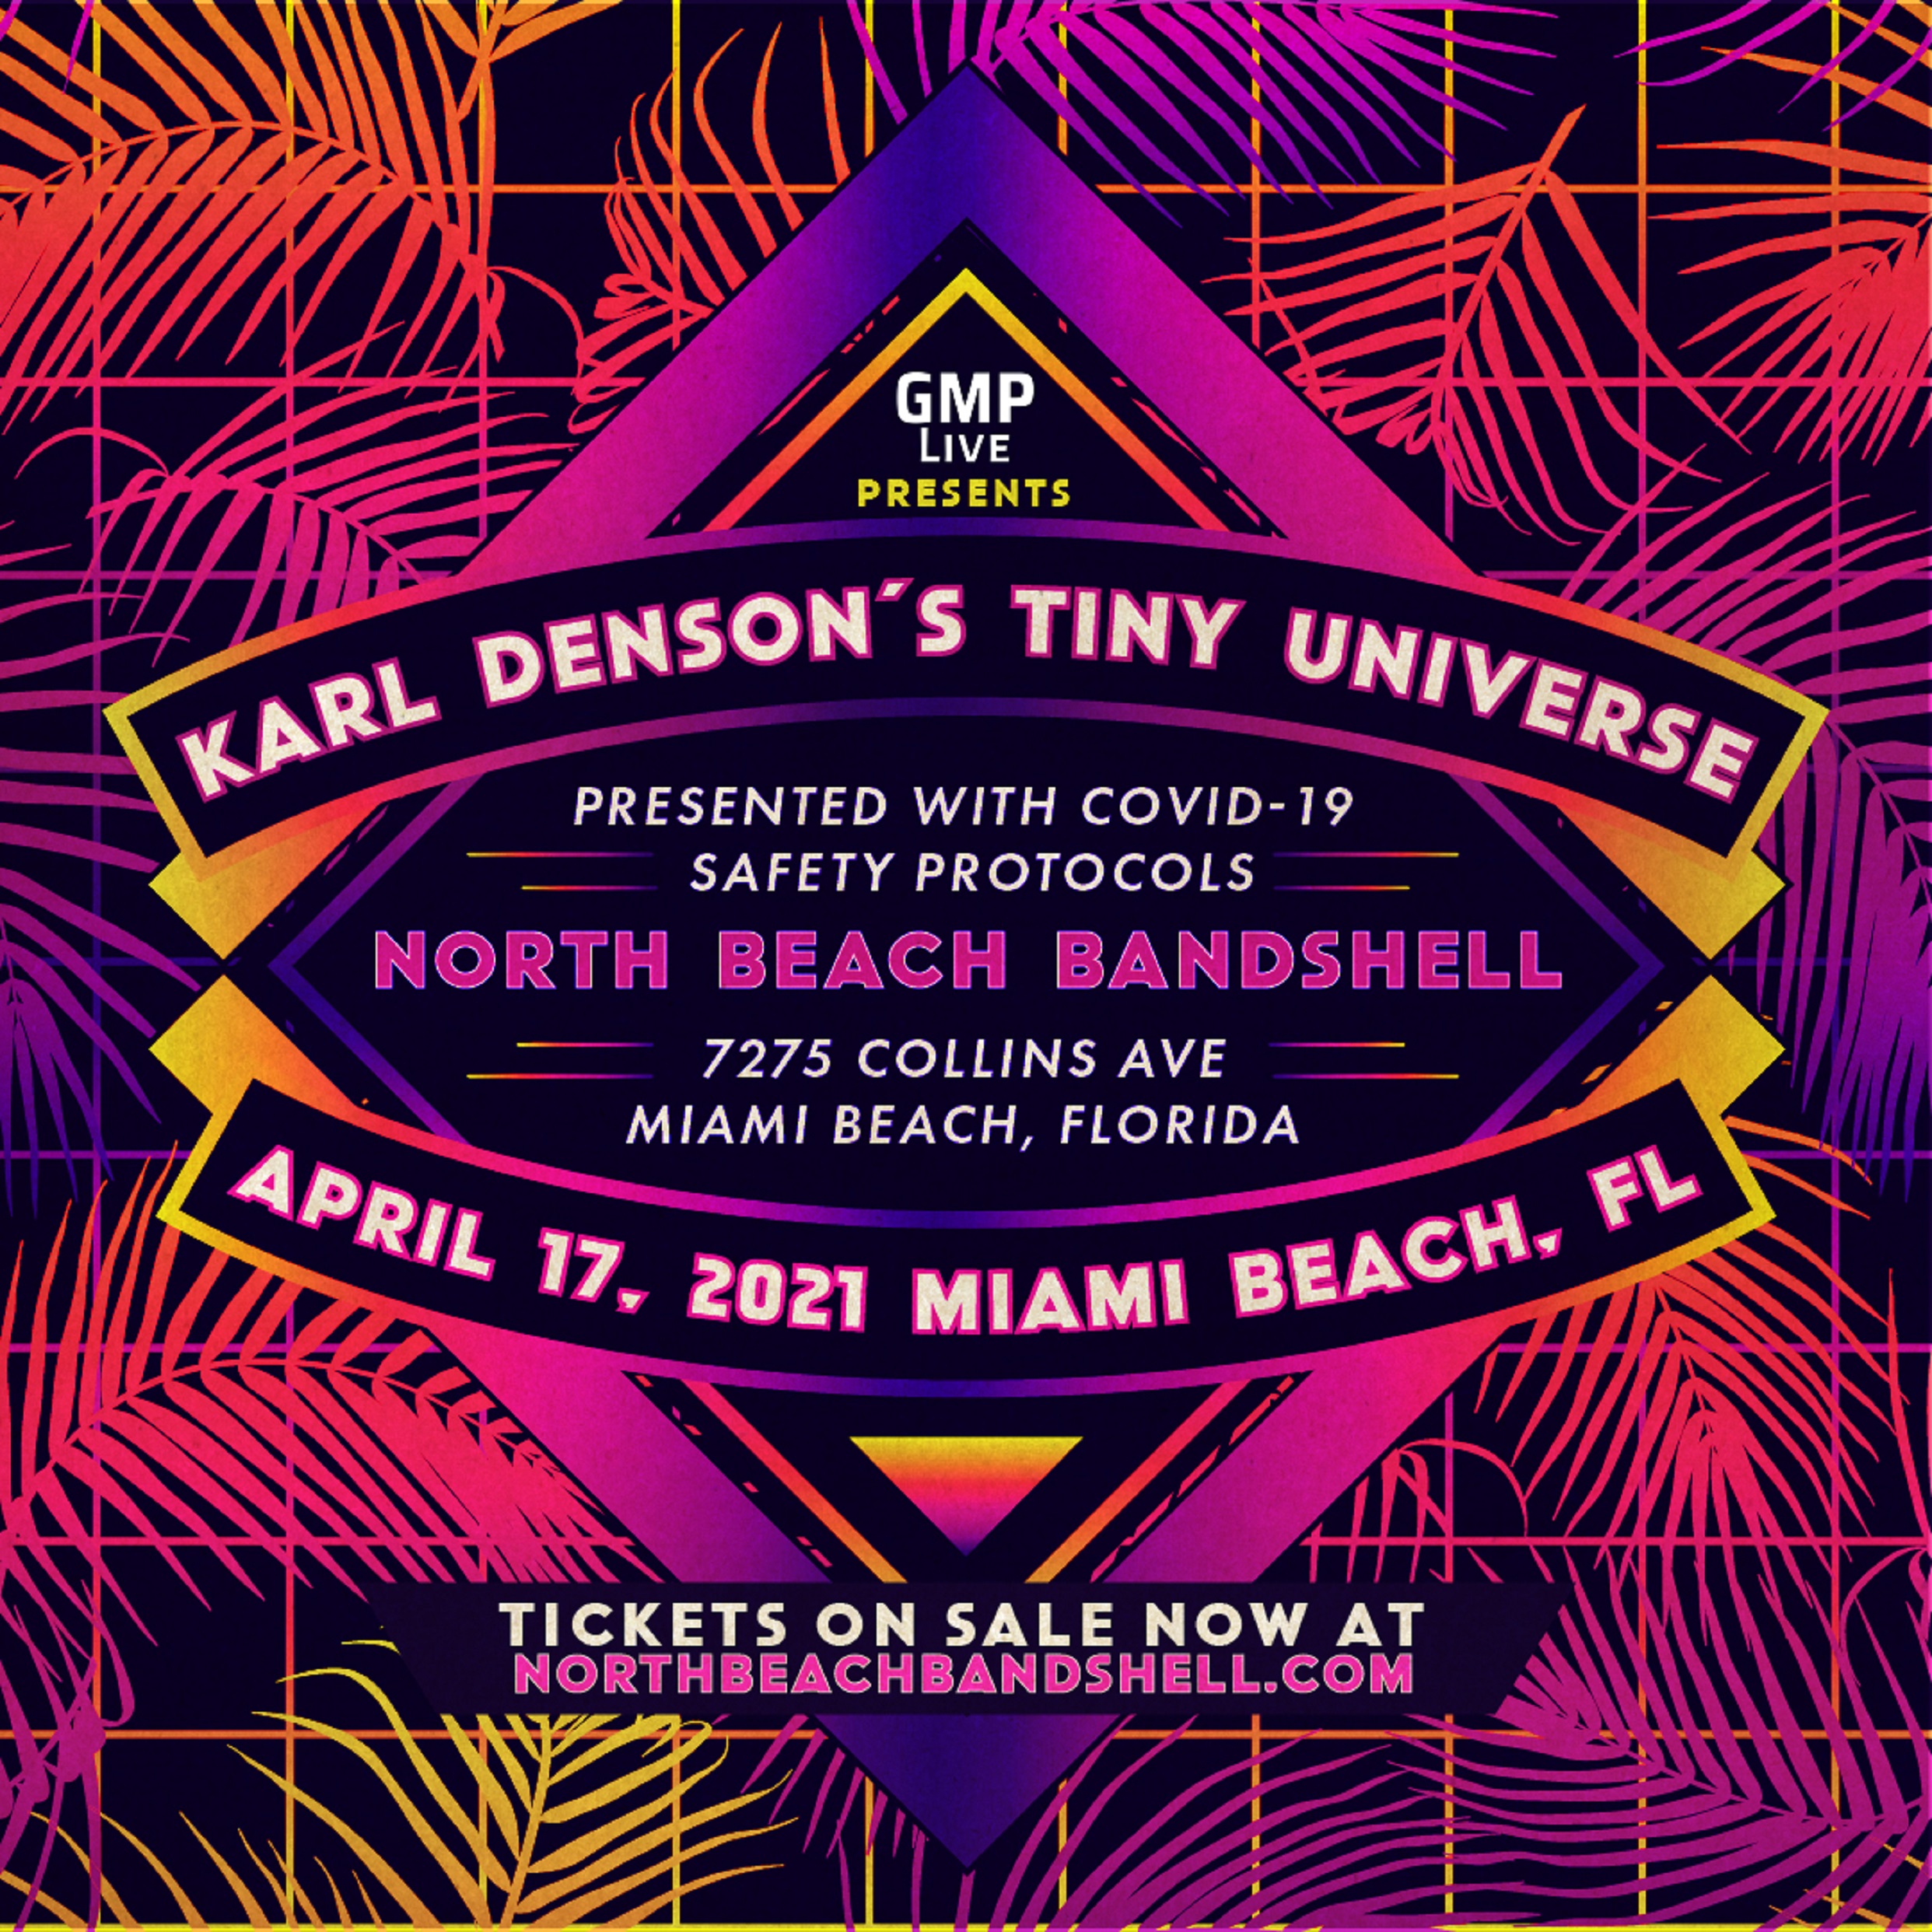 Karl Denson’s Tiny Universe to play Miami Beach on April 17th